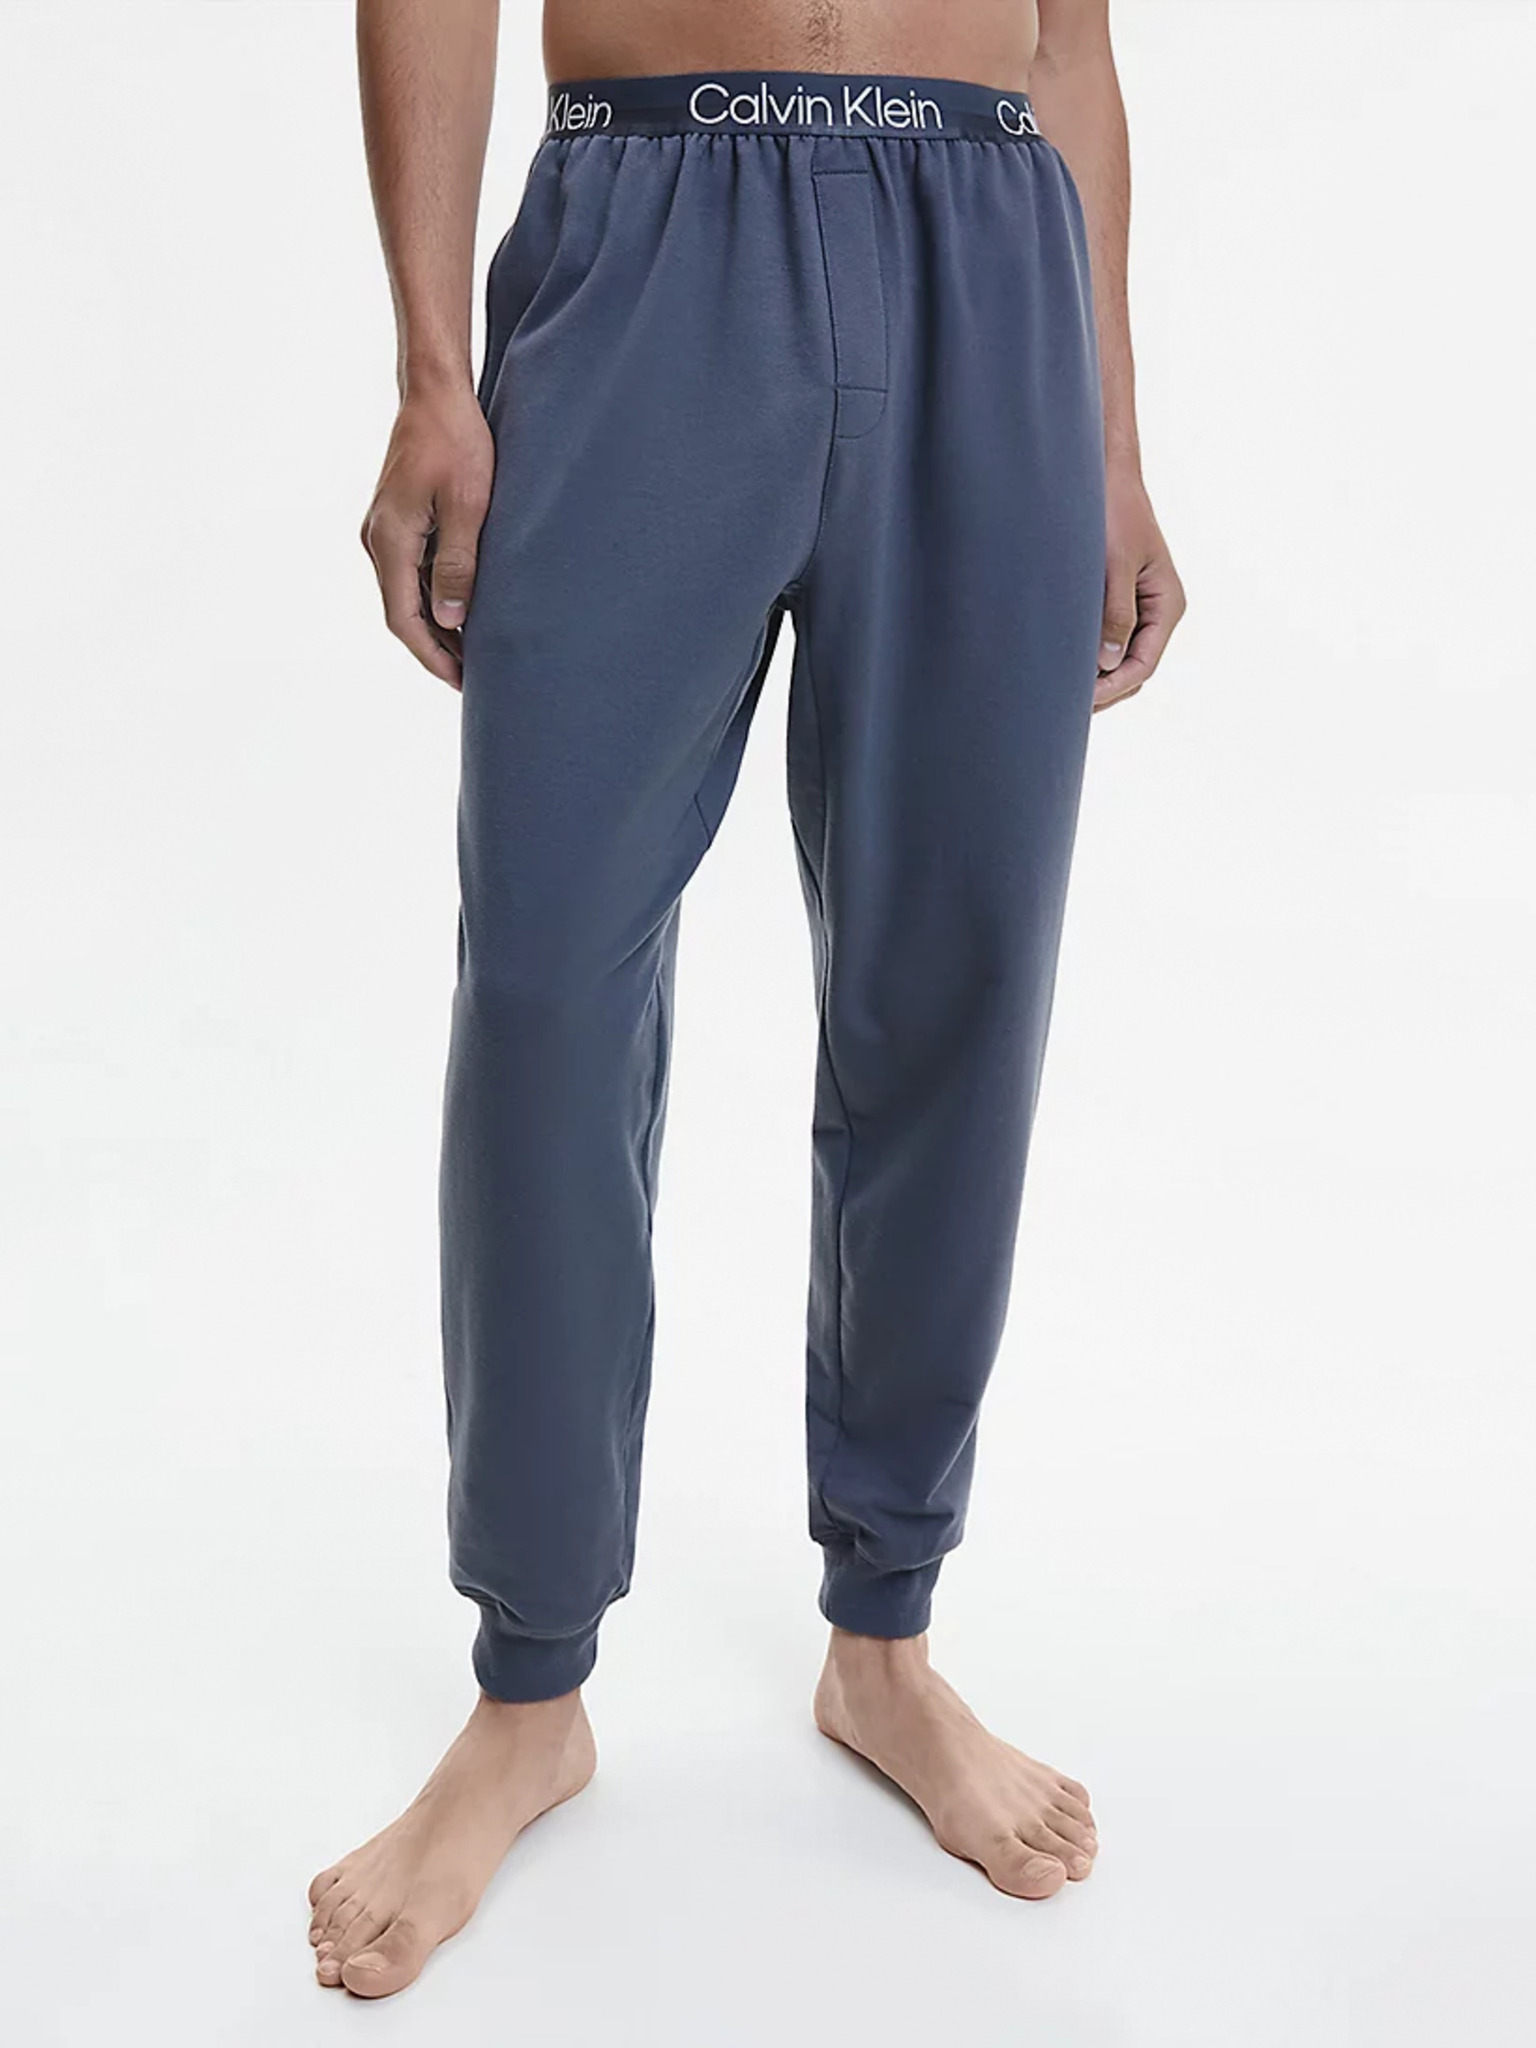 Calvin Klein Underwear - Sleeping pants